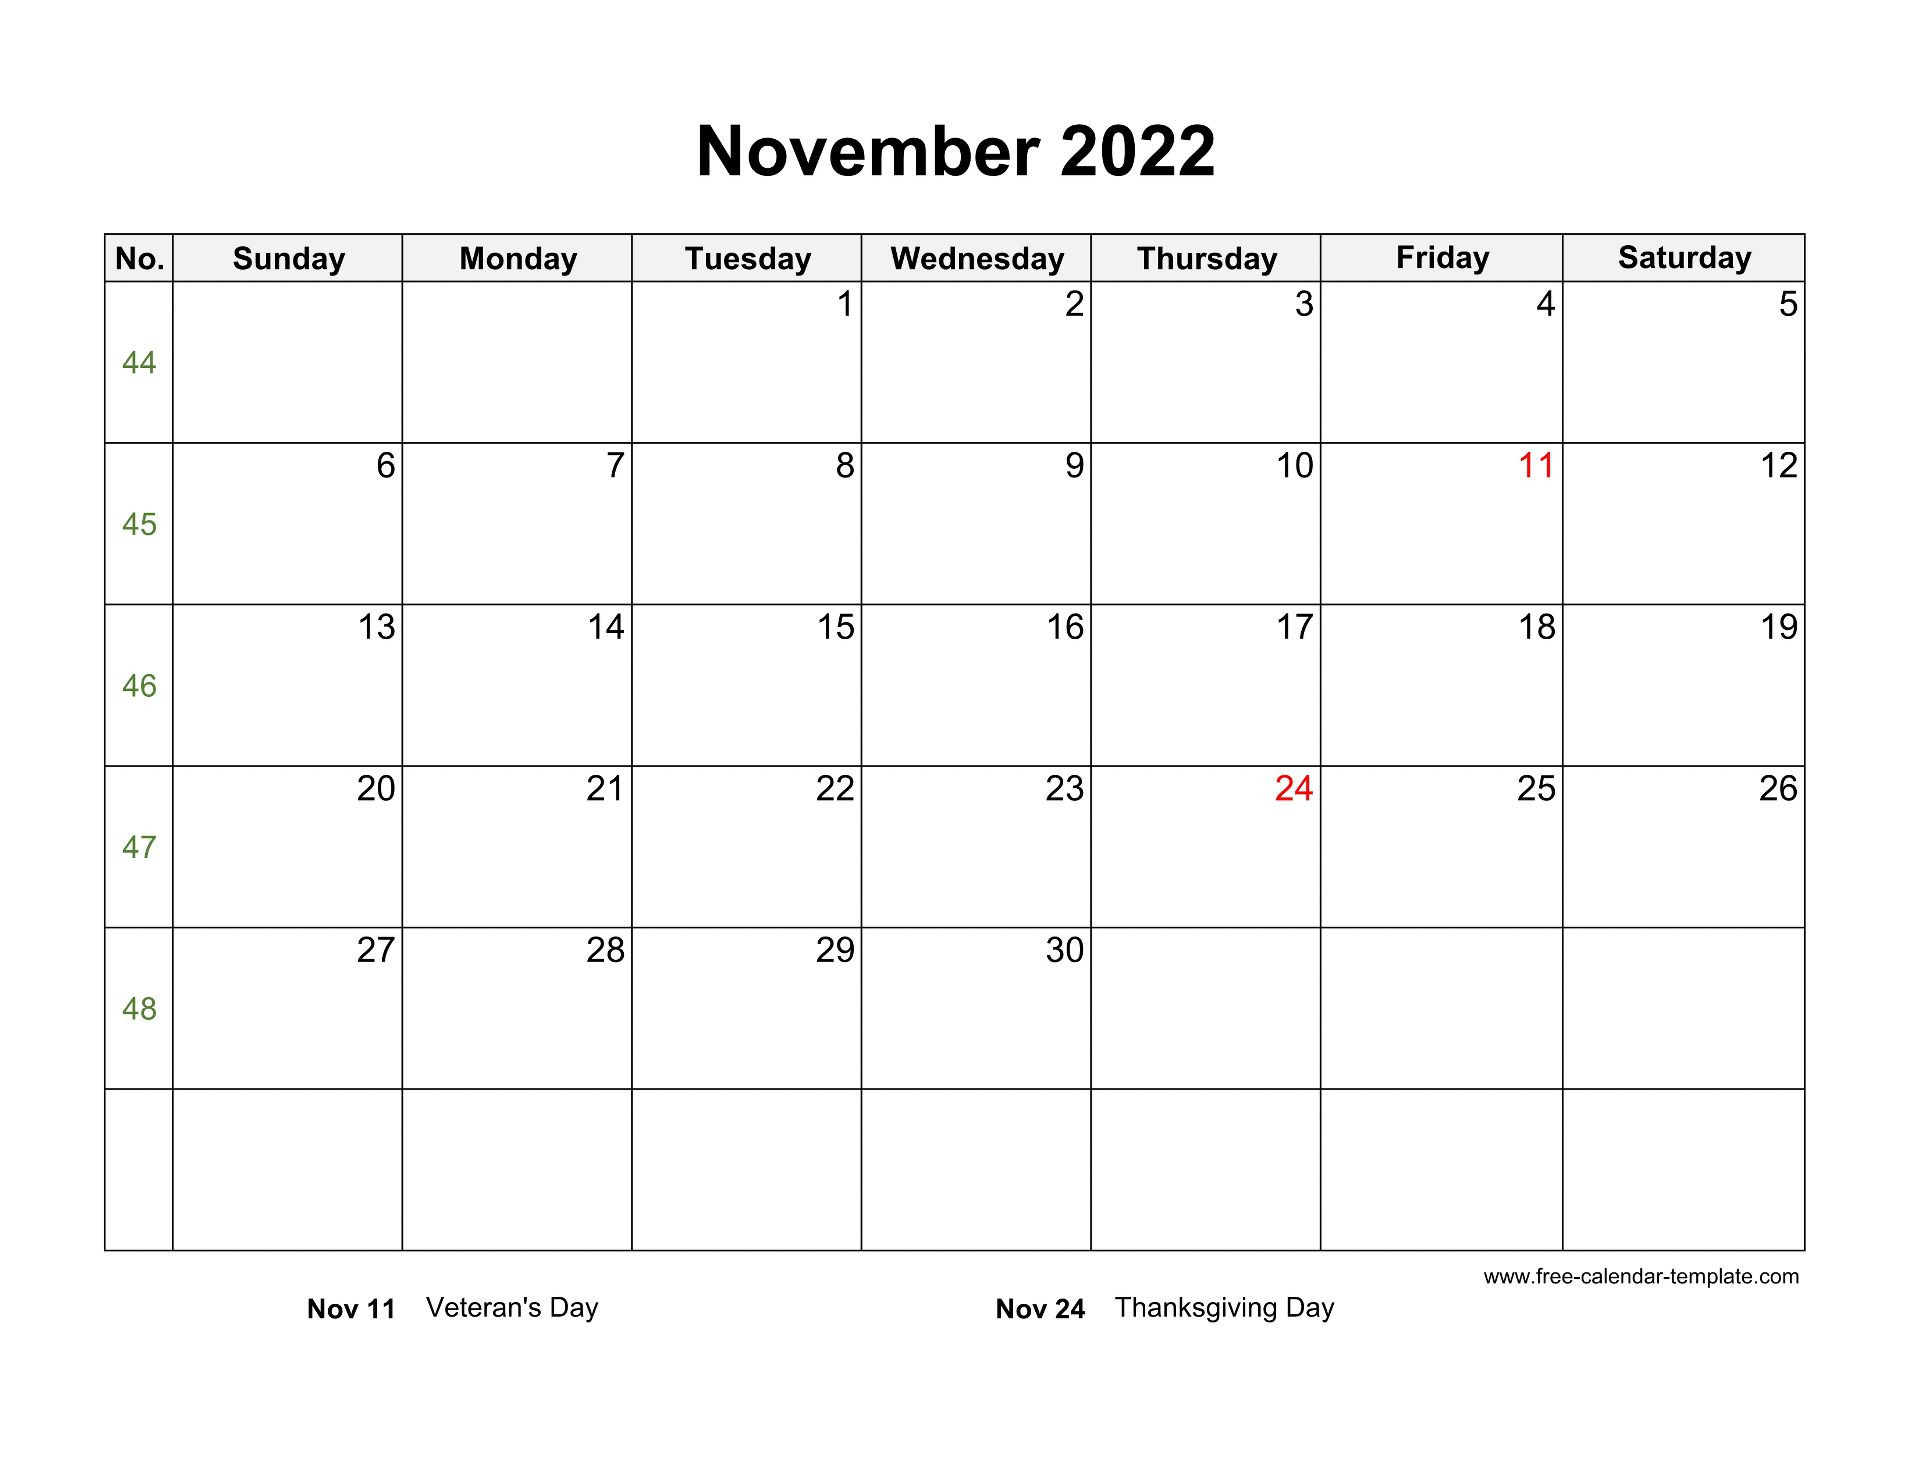 November 2022 Free Calendar Tempplate | Free-Calendar  Printable November 2022 Calendar